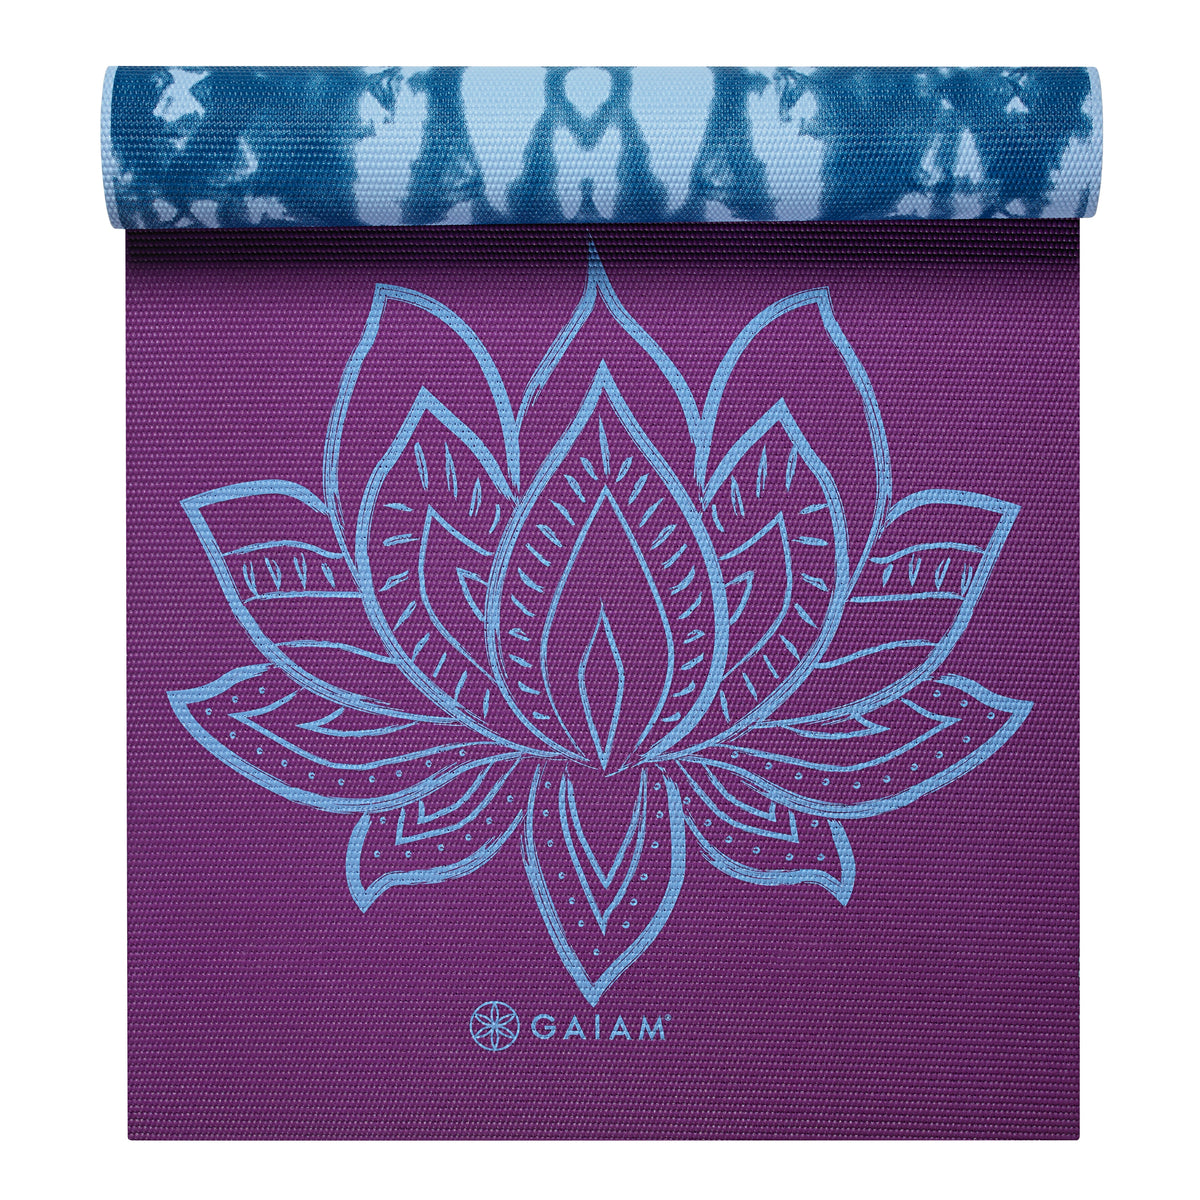  Lotus Printed Yoga Mat 5MM Purple : Sports & Outdoors